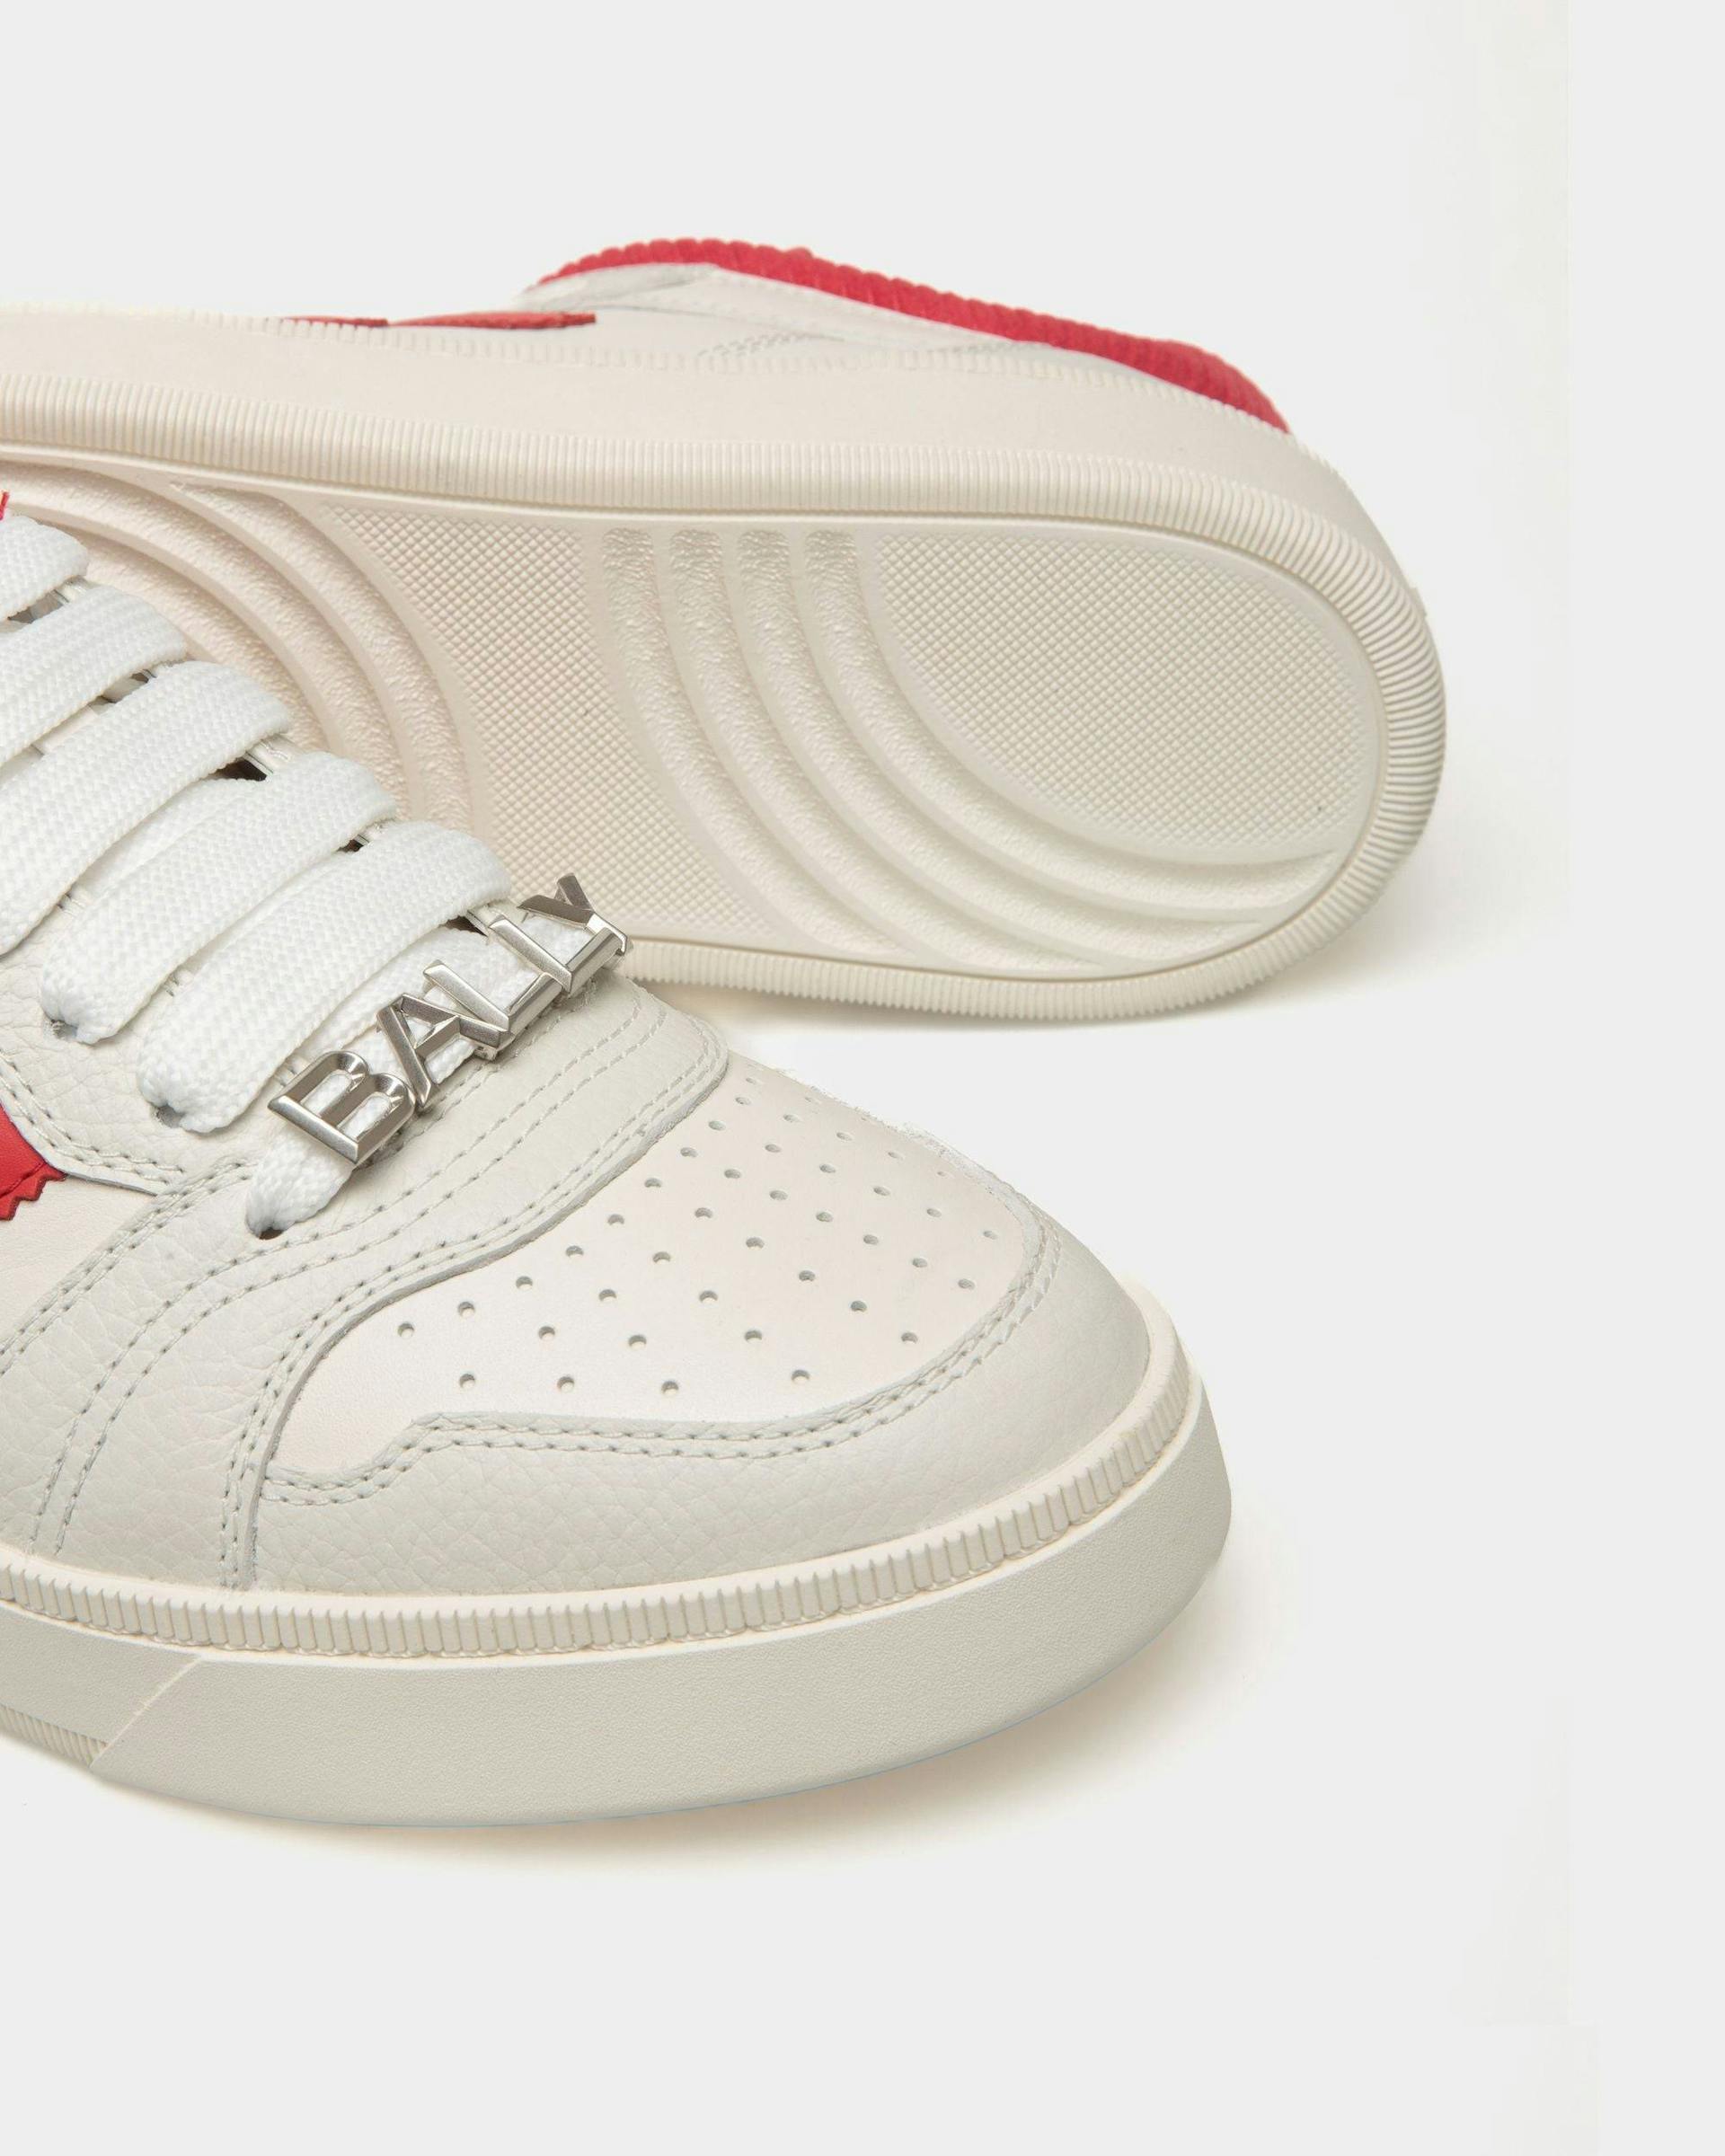 Men's Raise Sneaker in White Leather | Bally | Still Life Below